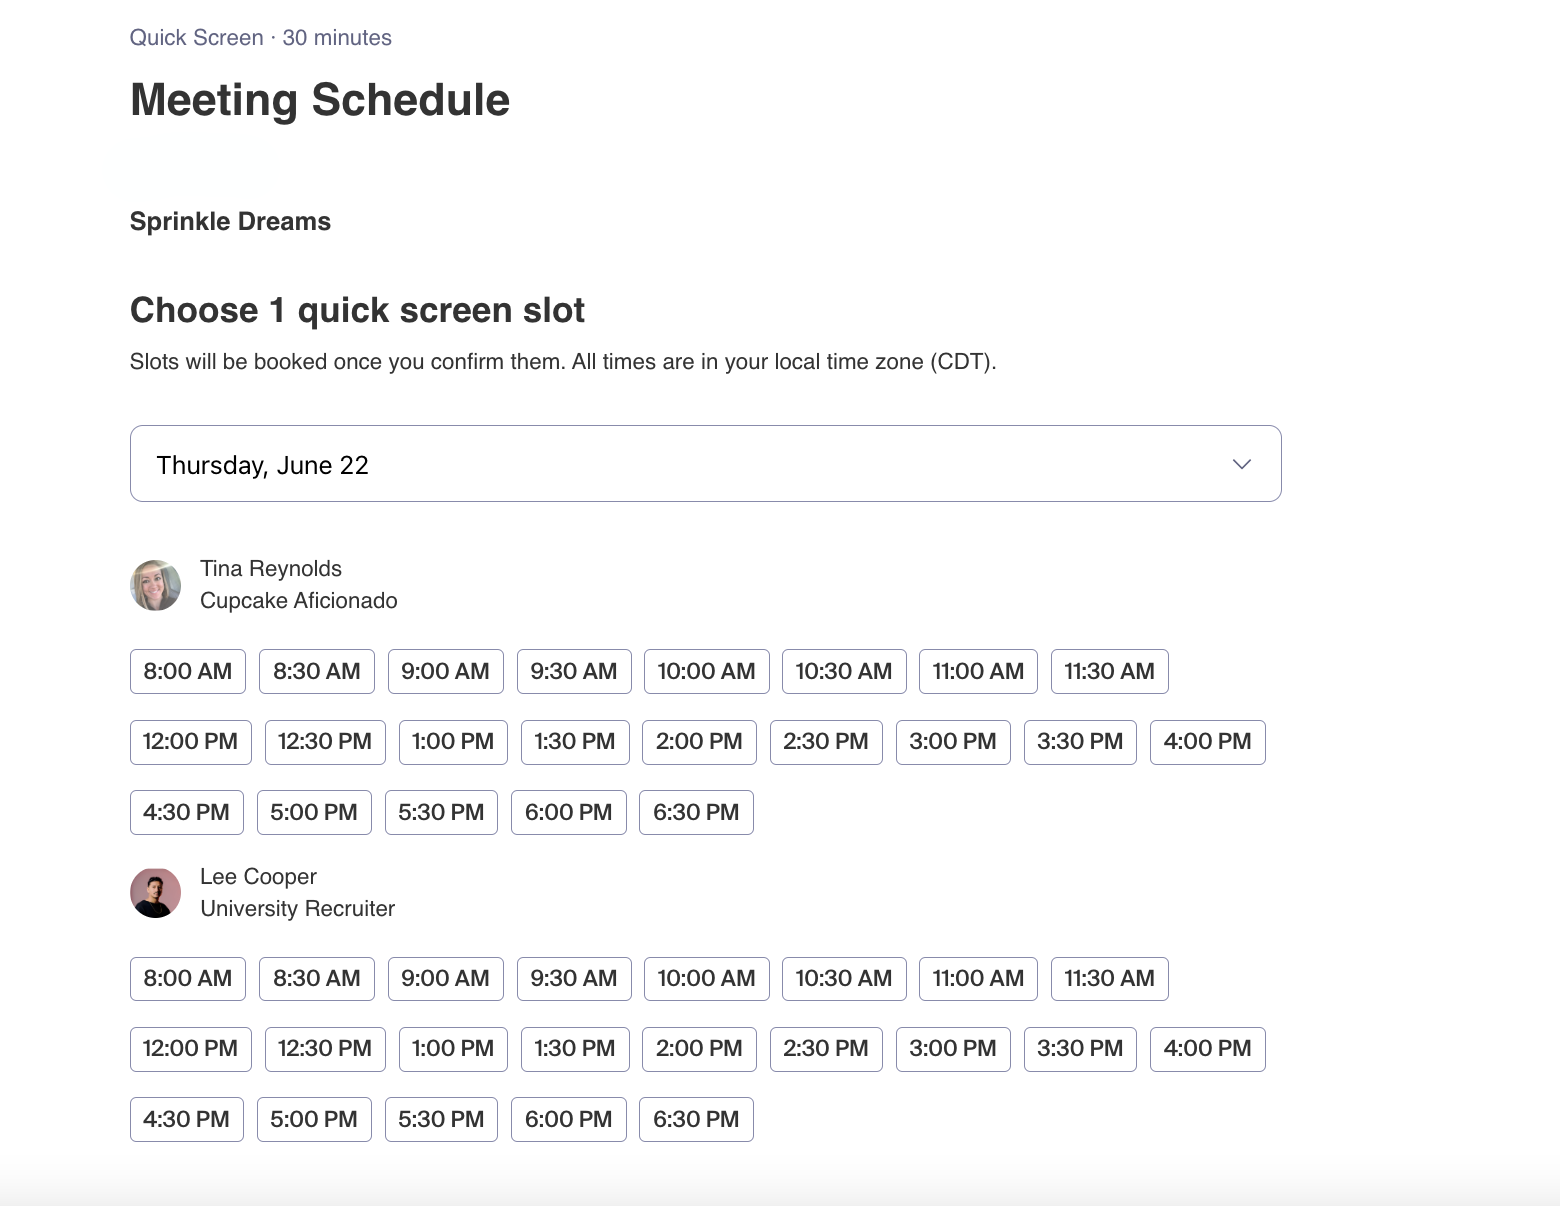 Meeting_Schedule_Image.png